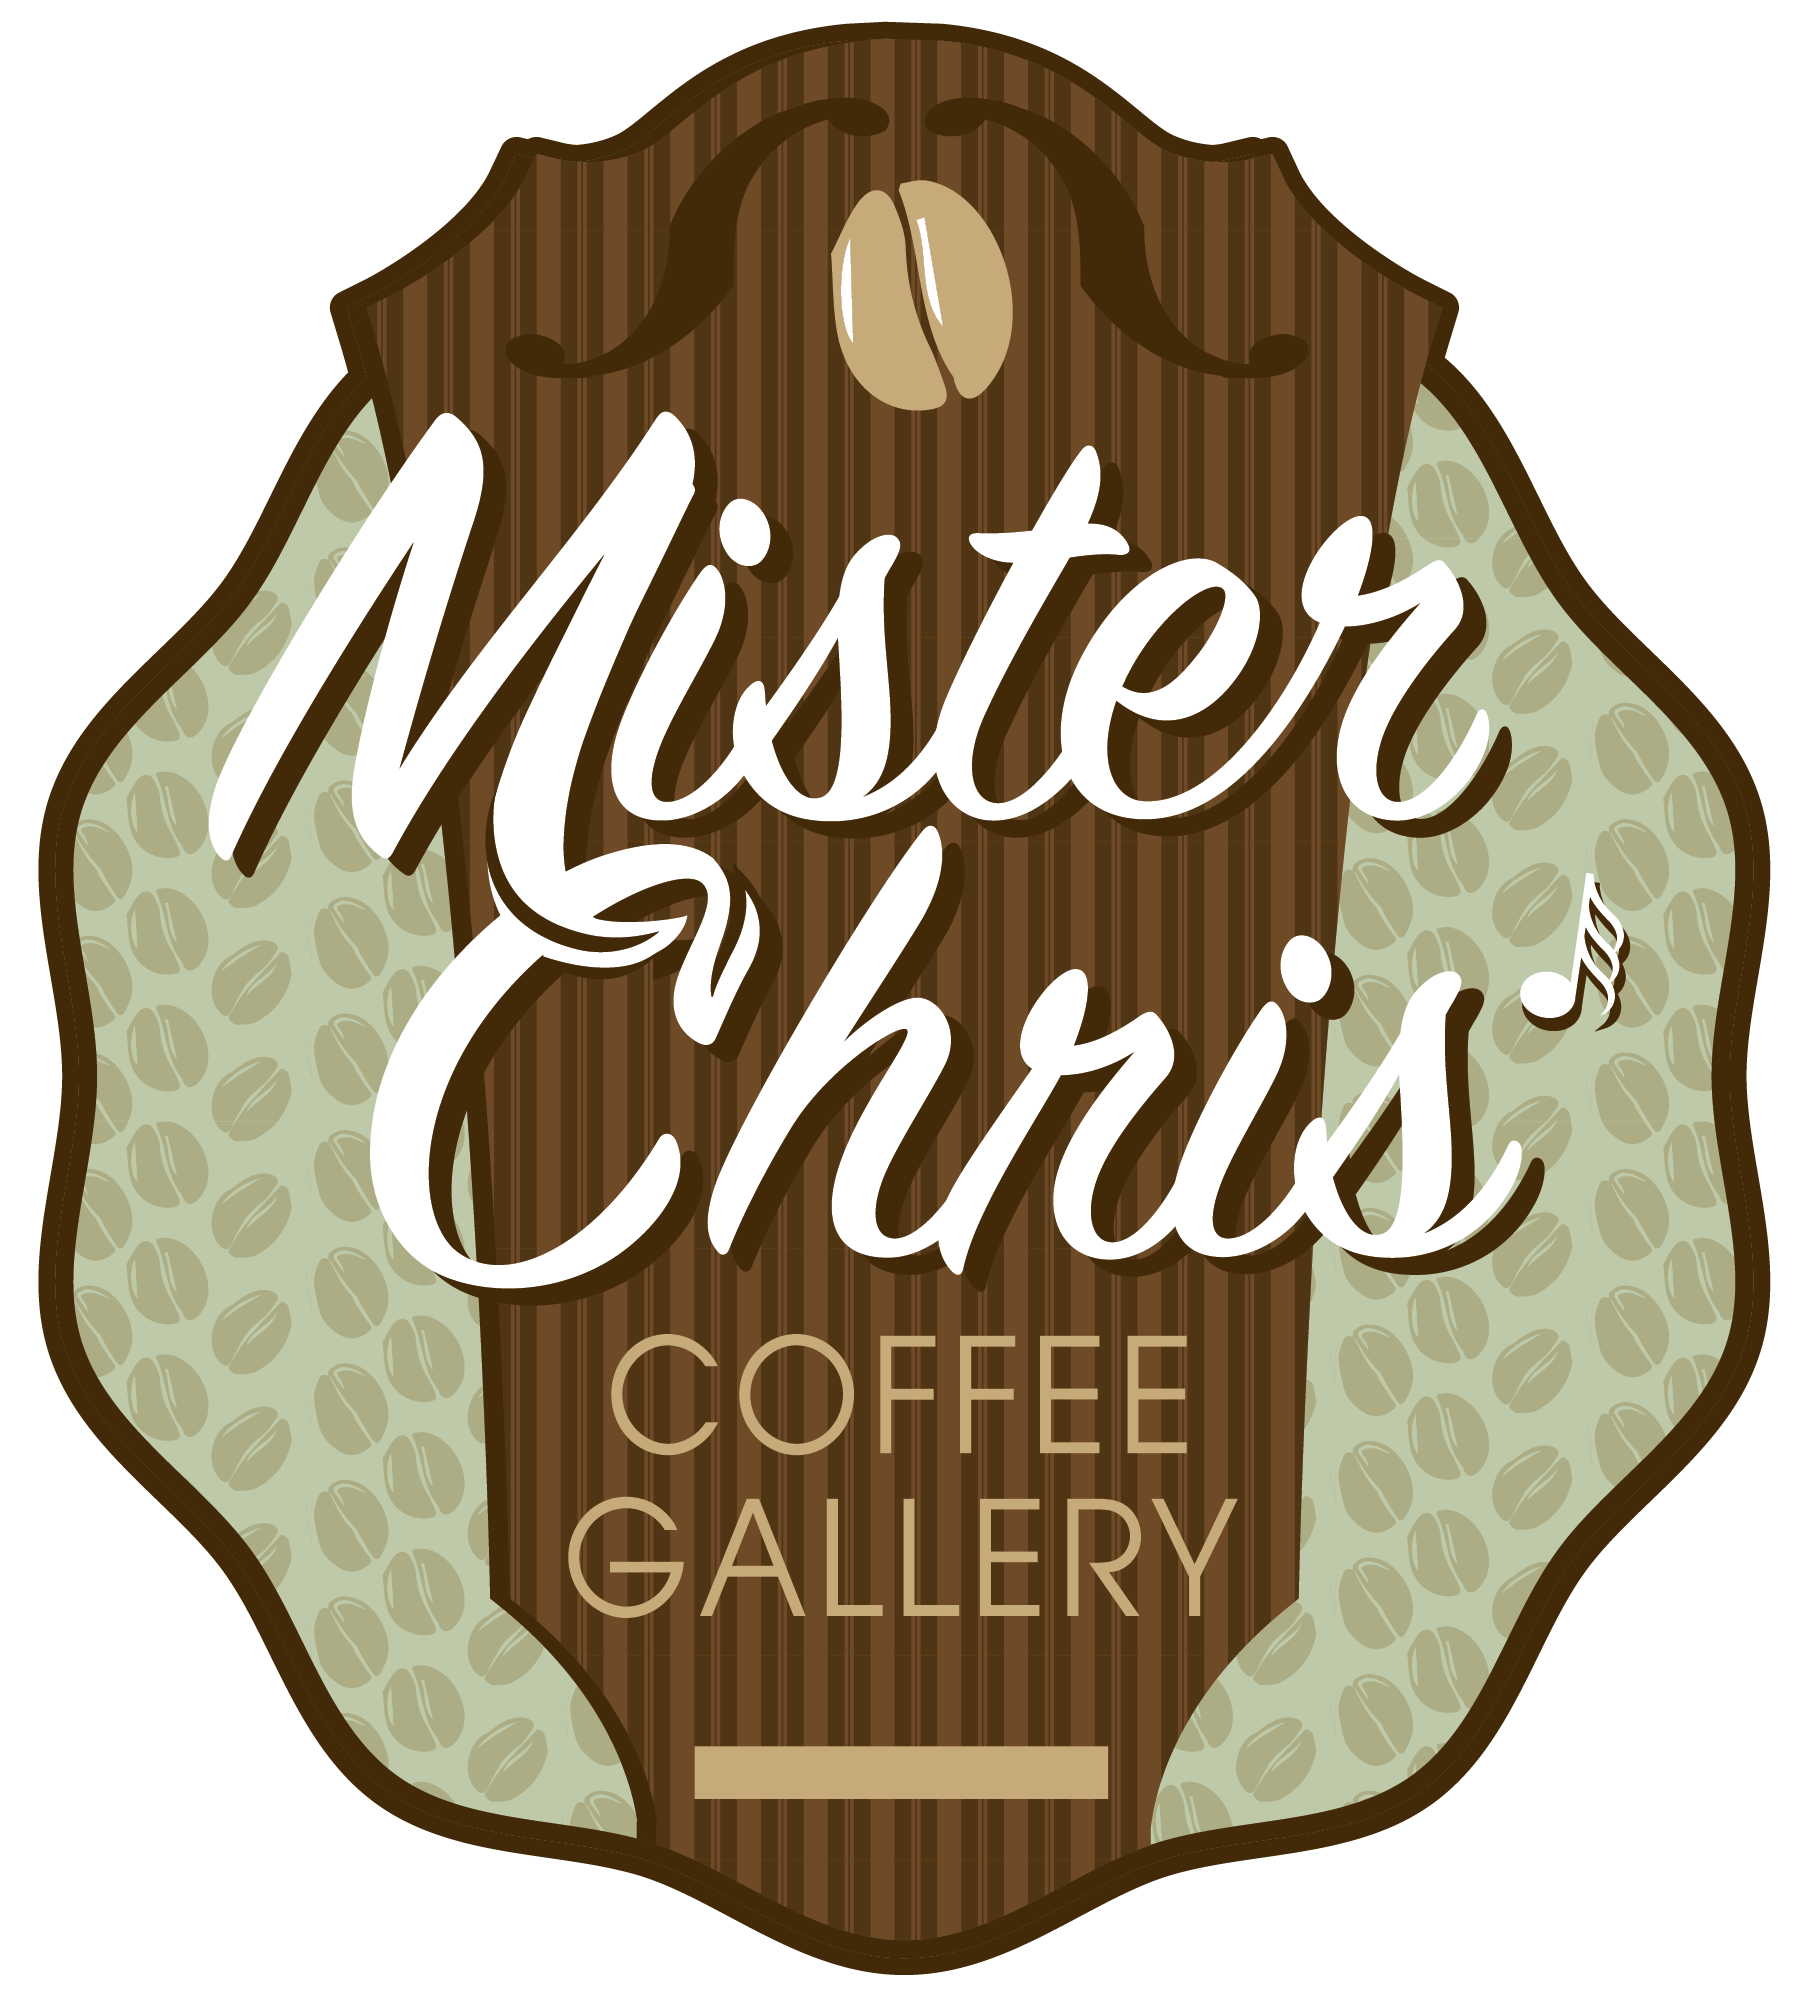 Mister Chris' Coffee Gallery